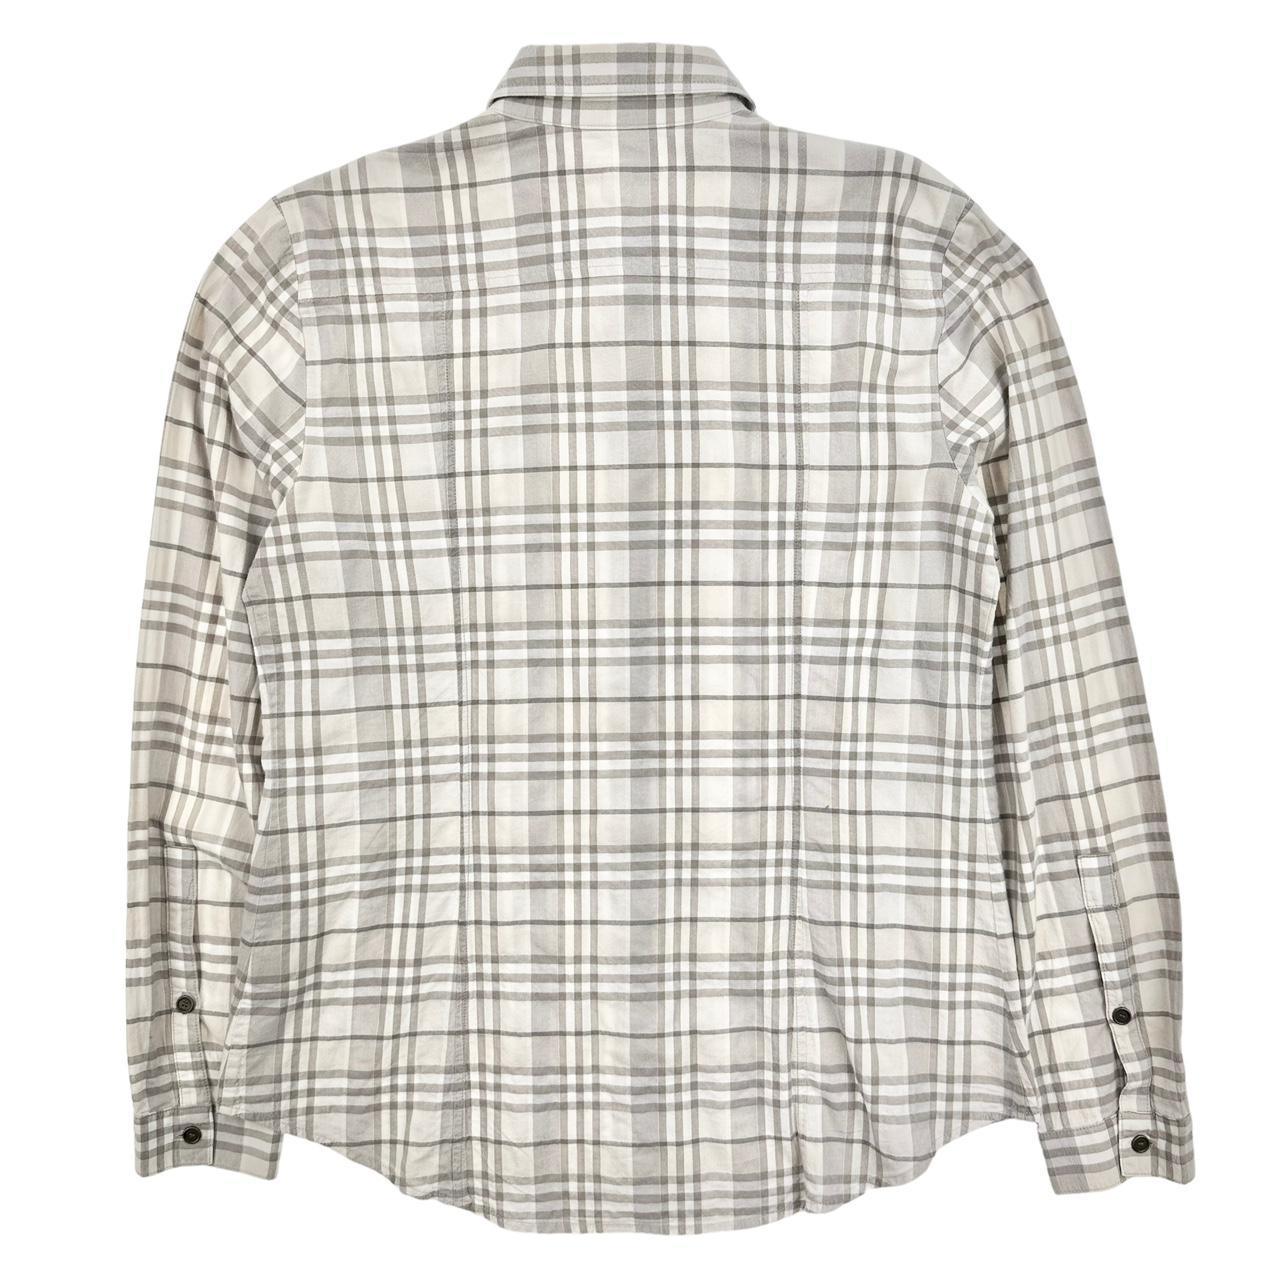 Burberry nova check button shirt size M - Known Source